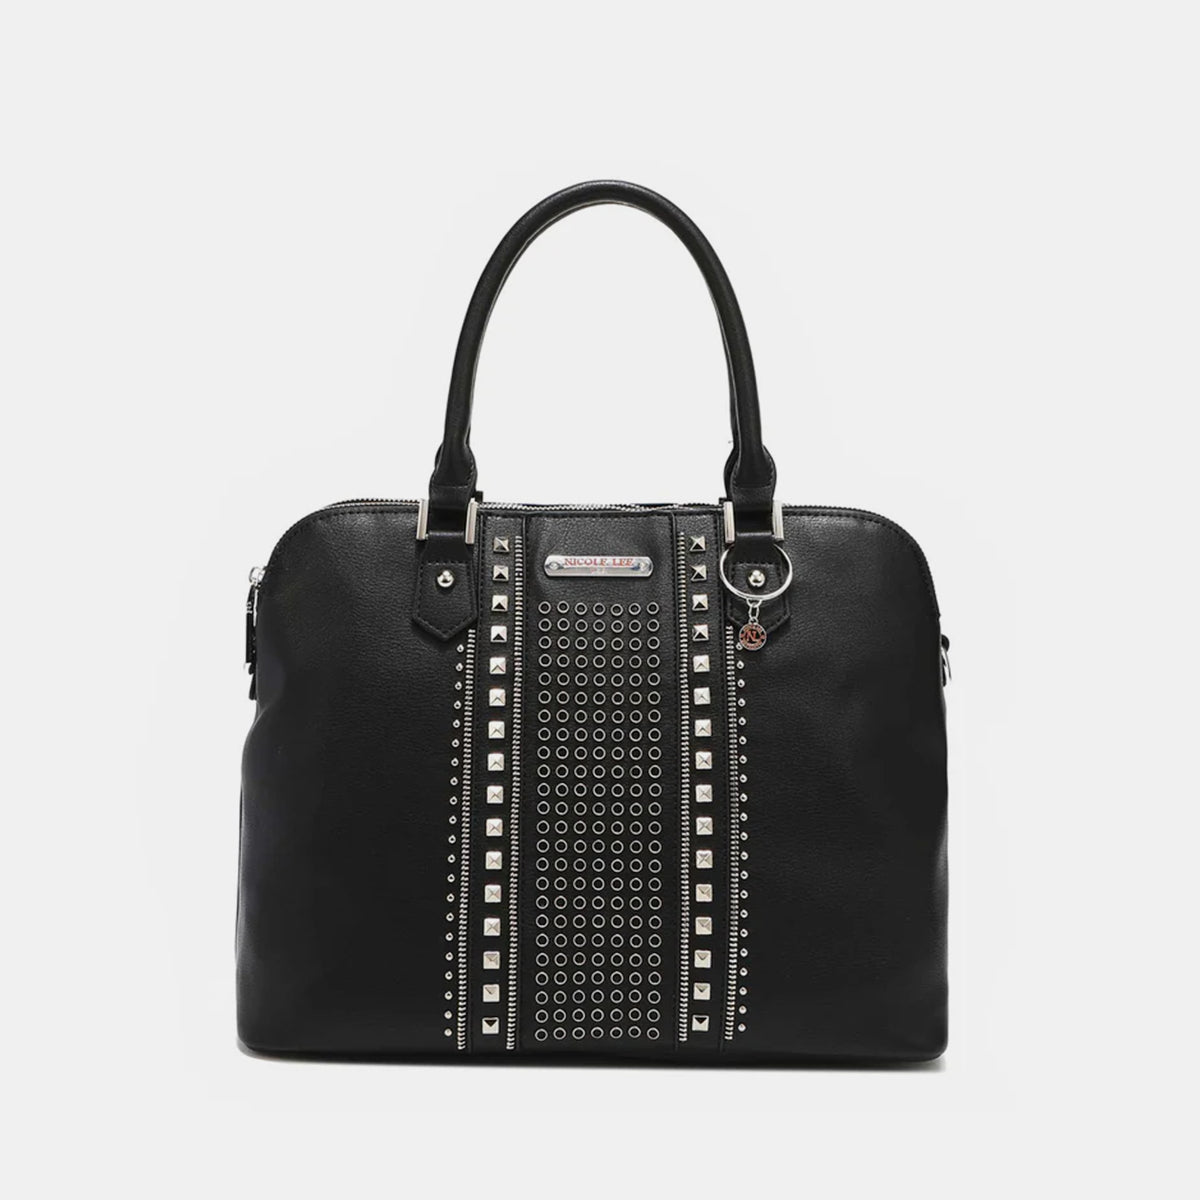 Nicole Lee USA Studded Decor Handbag Black One Size